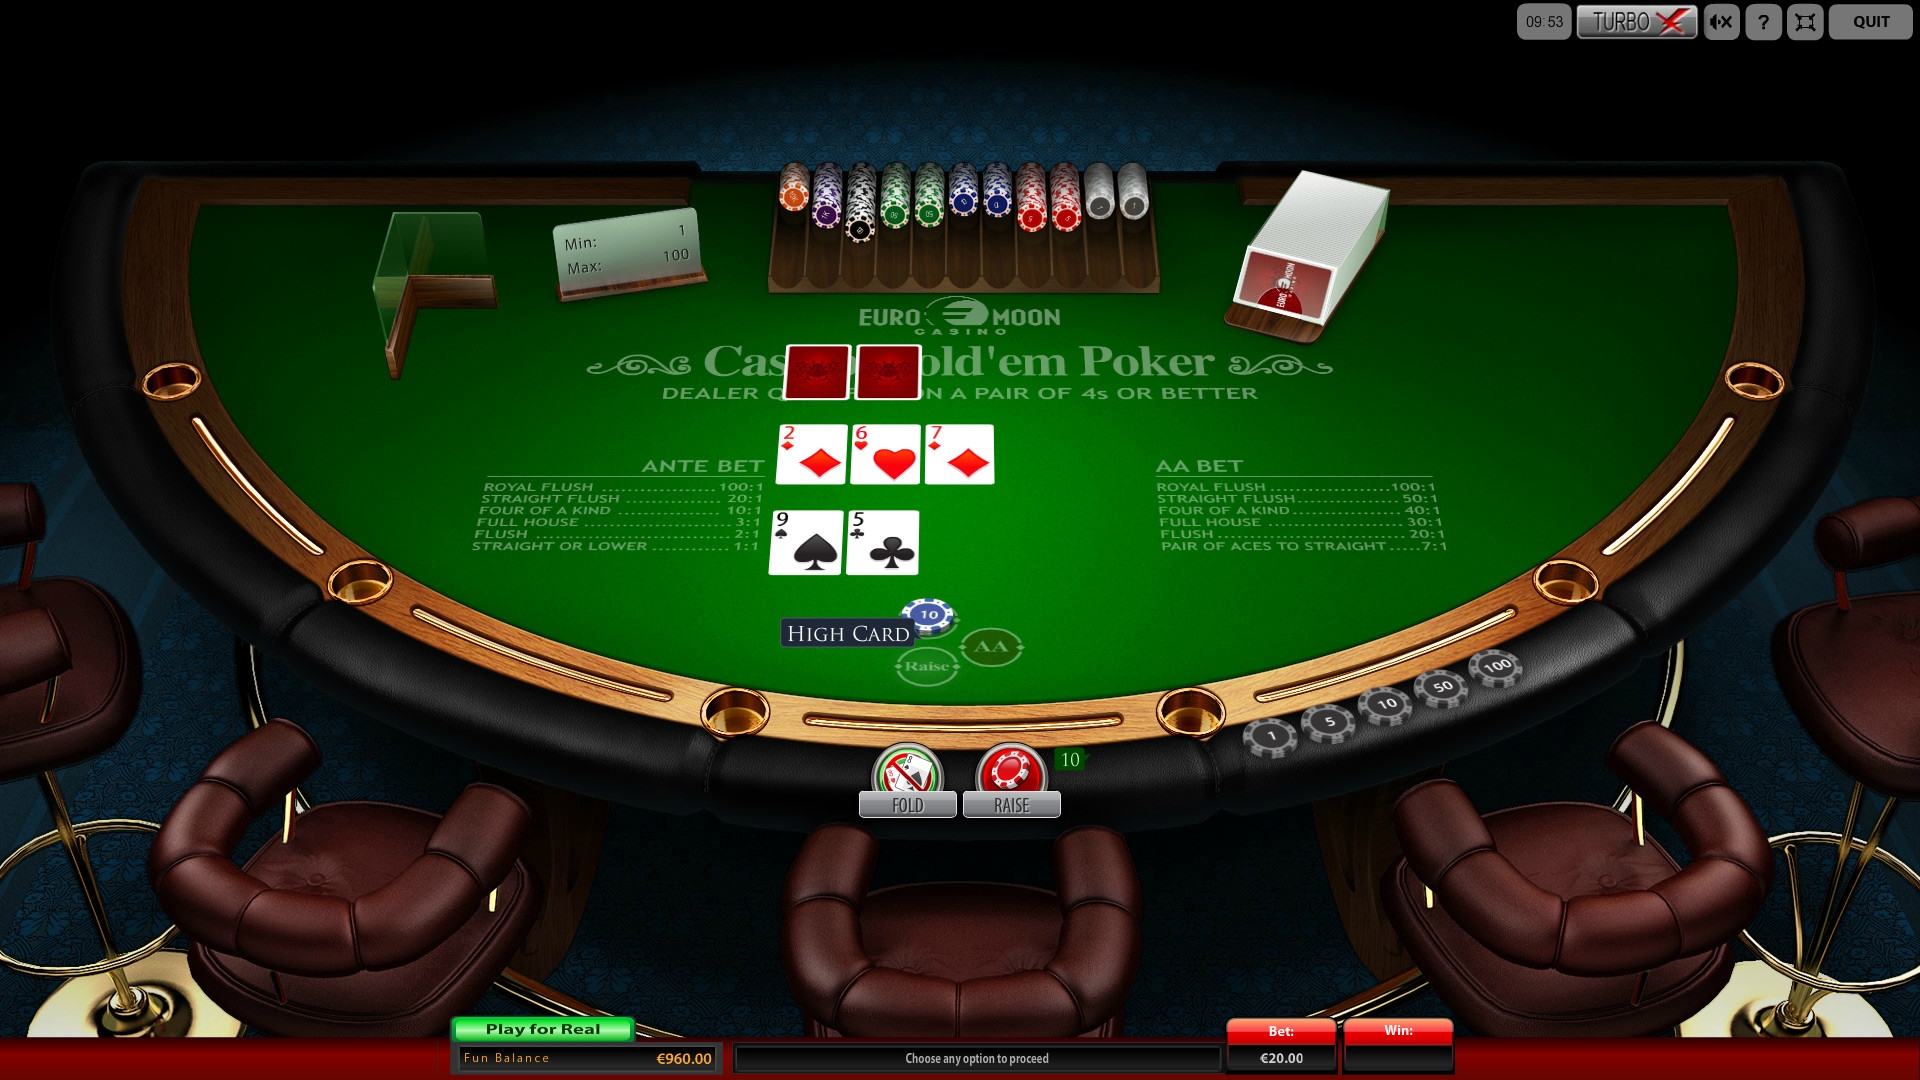 CasinoHold’em Poker (Casino Hold’em Poker) from category Poker